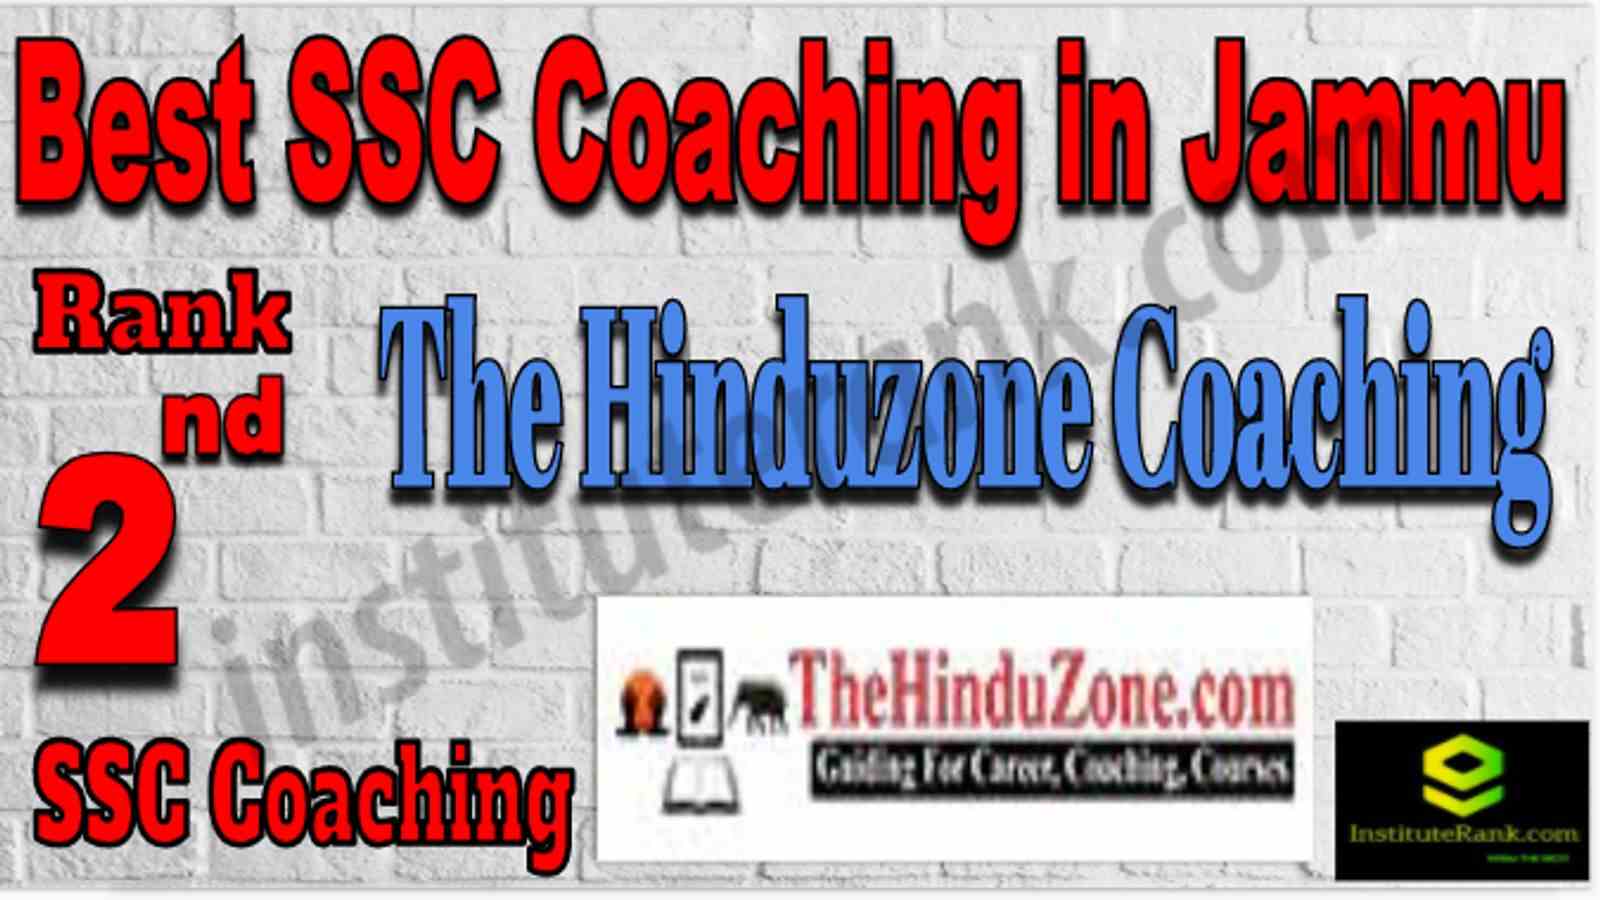 Rank 2 Best SSC Coaching in Jammu